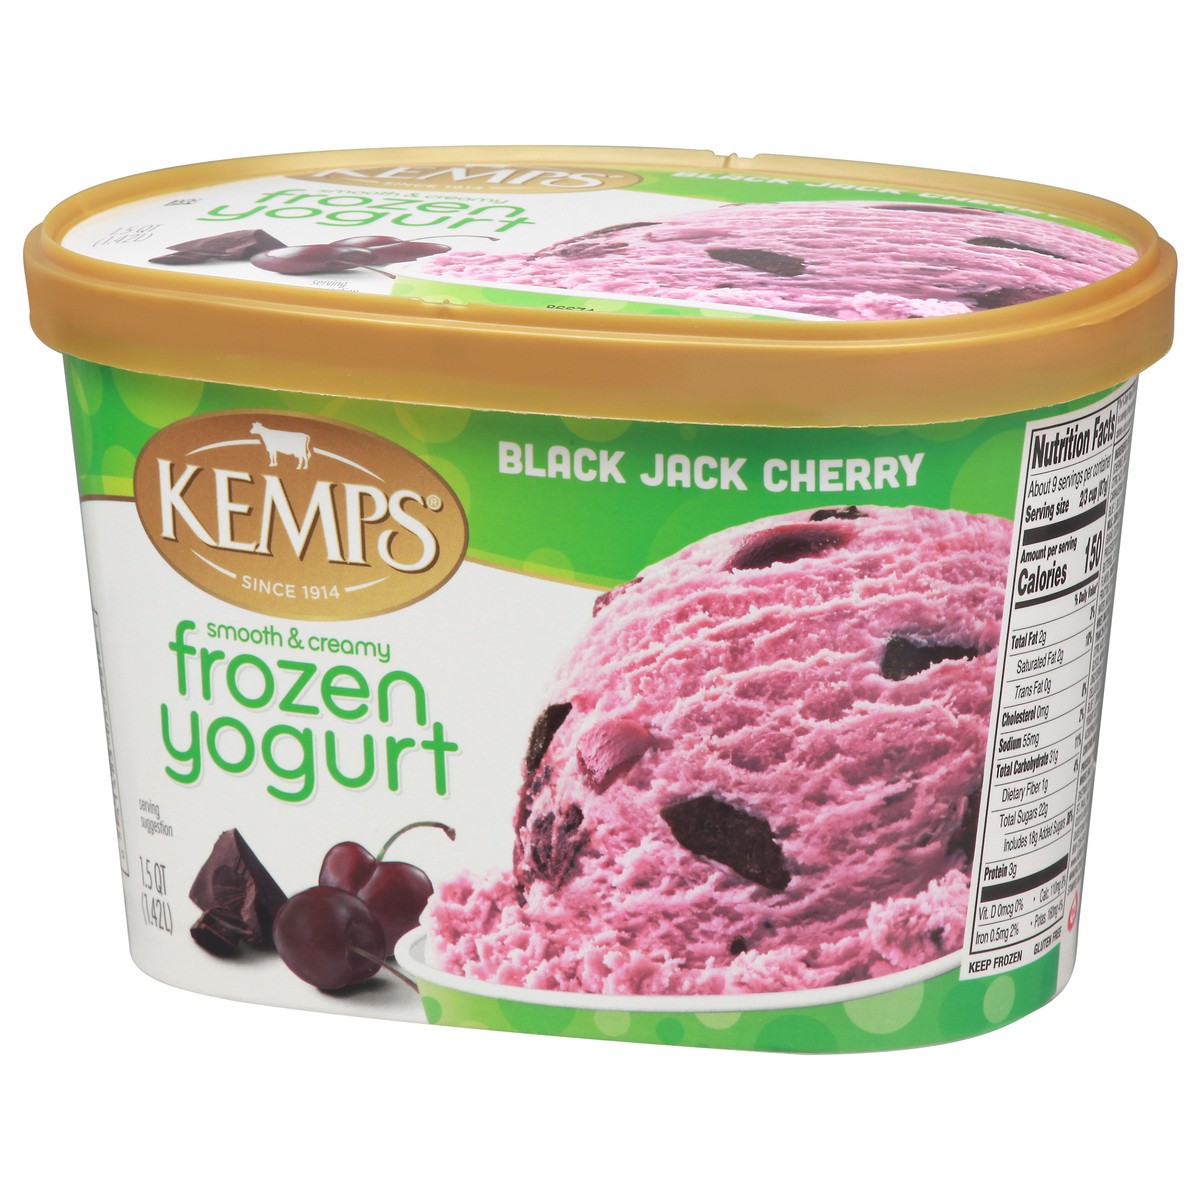 slide 9 of 13, Kemps Black Jack Cherry Low Fat Smooth & Creamy Frozen Yoghurt, 1.5 qt